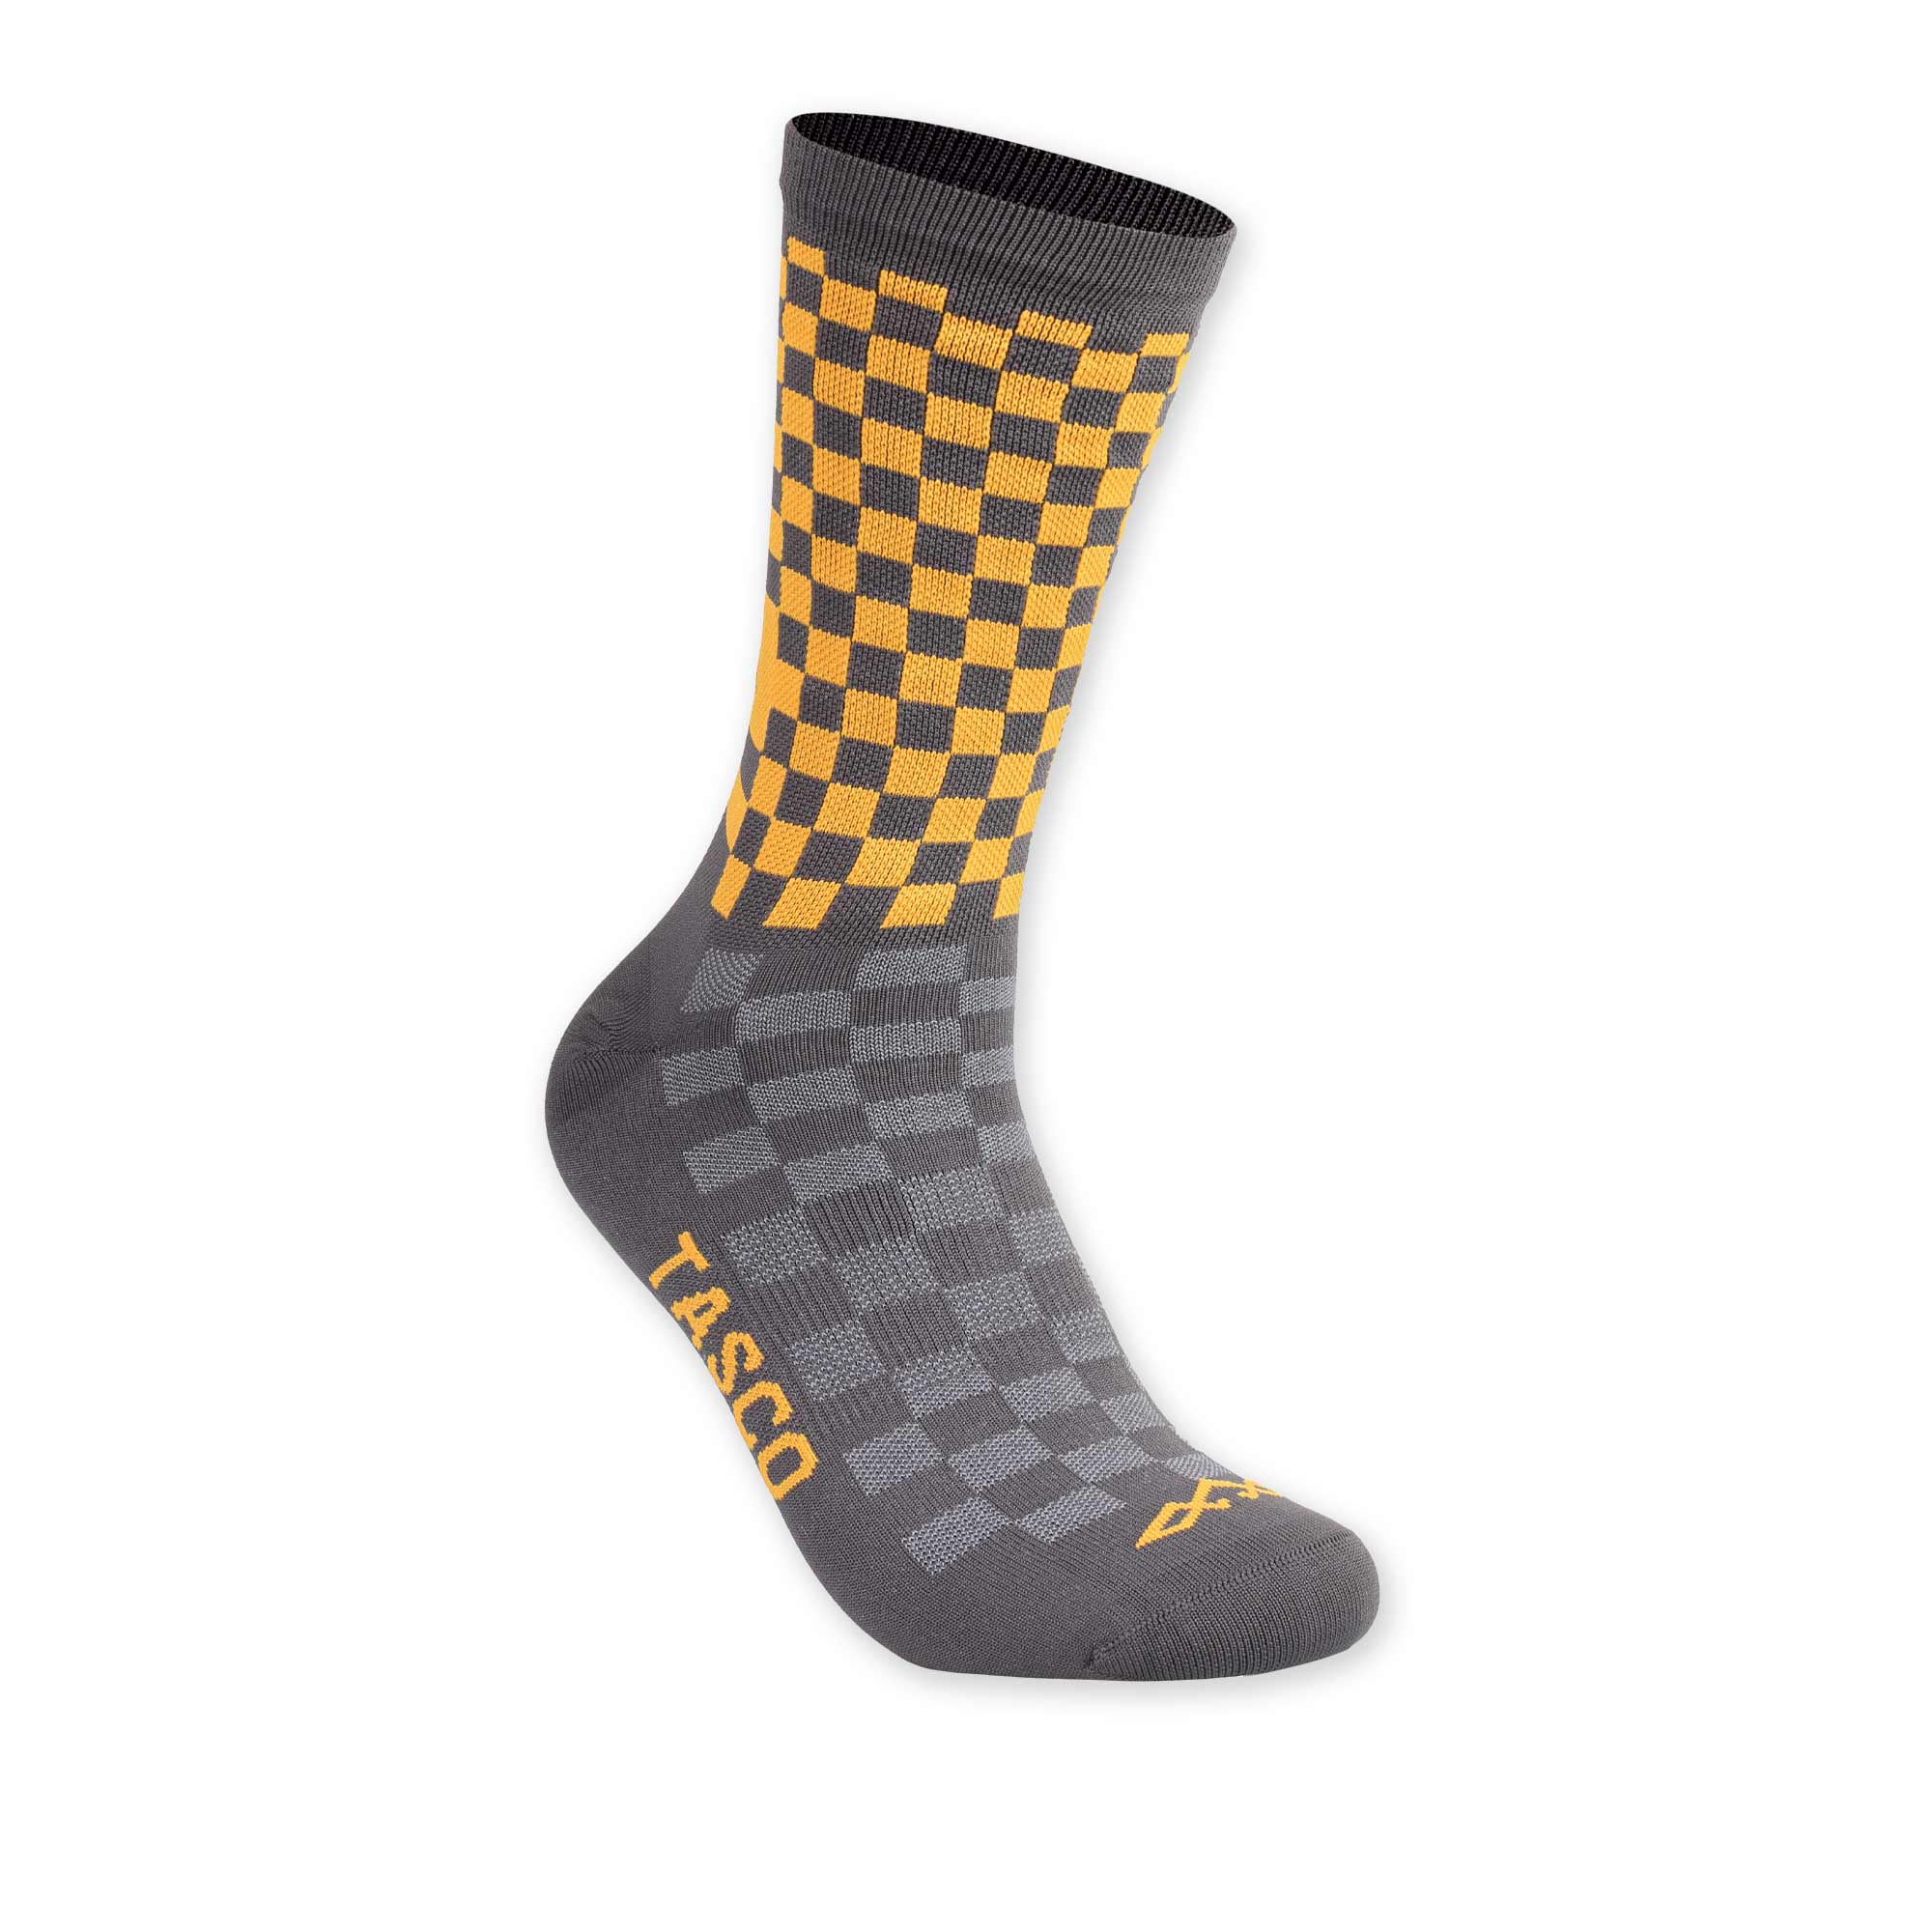 Checkmate-Yellow-socks-front.jpg